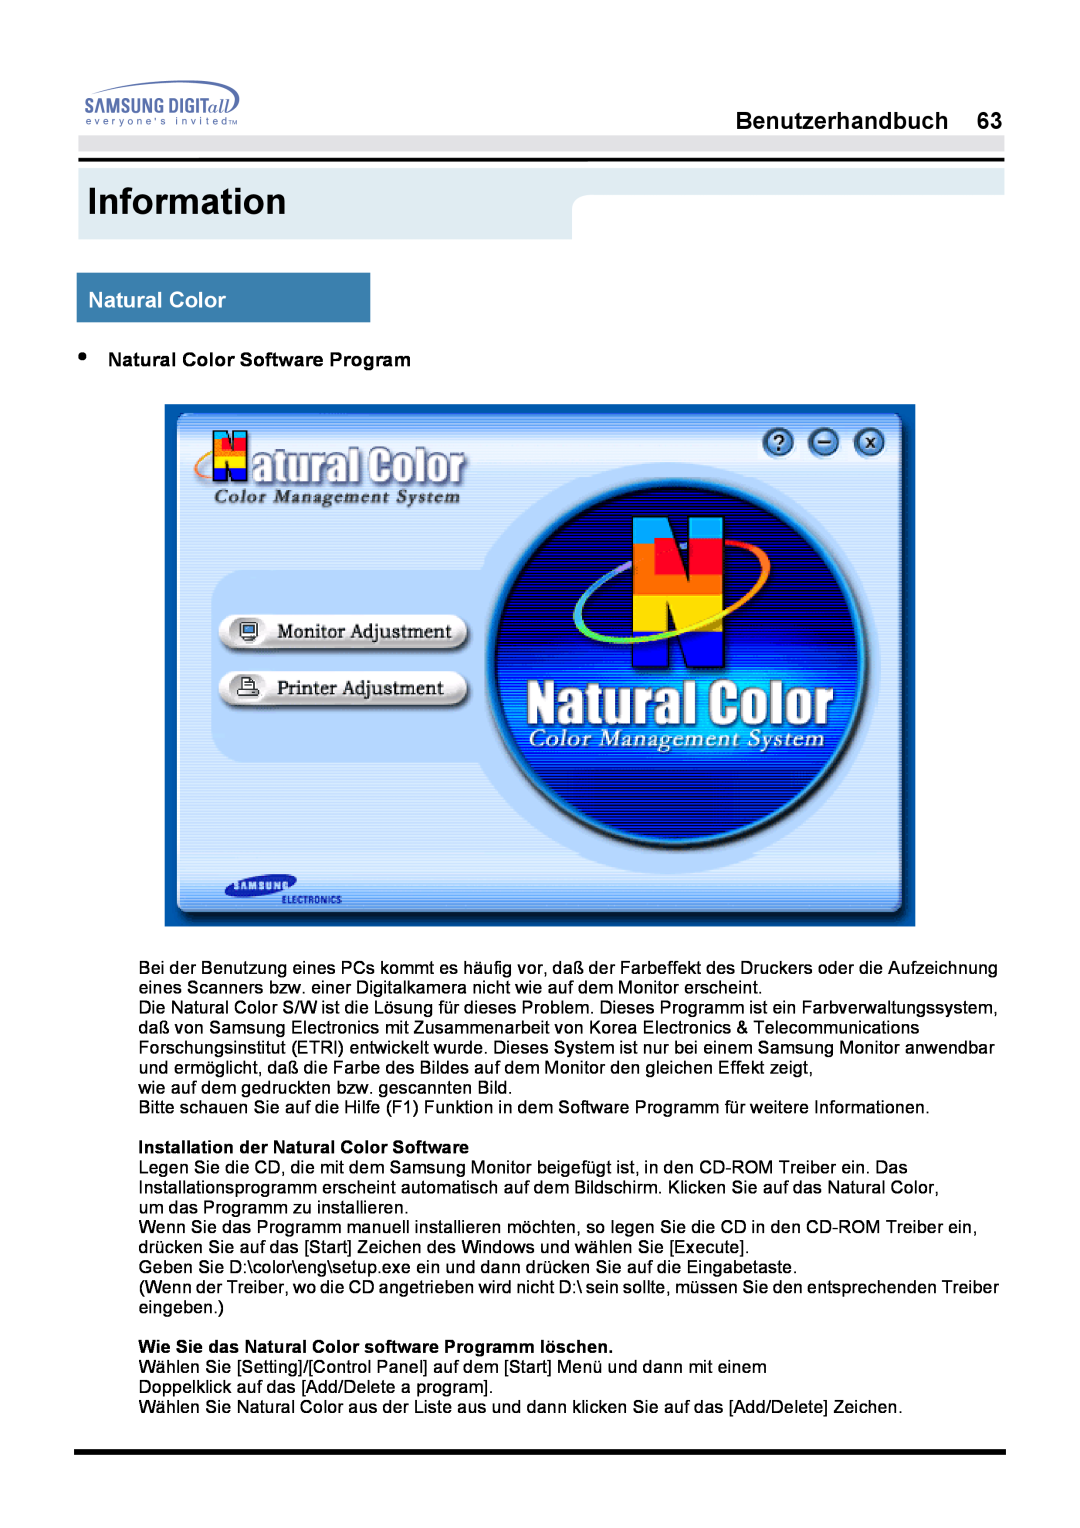 Samsung GH17LSAS/EDC, GH17HSSN/EDC, GH17ESSNZ/EDC manual Information, Benutzerhandbuch, Natural Color Software Program 